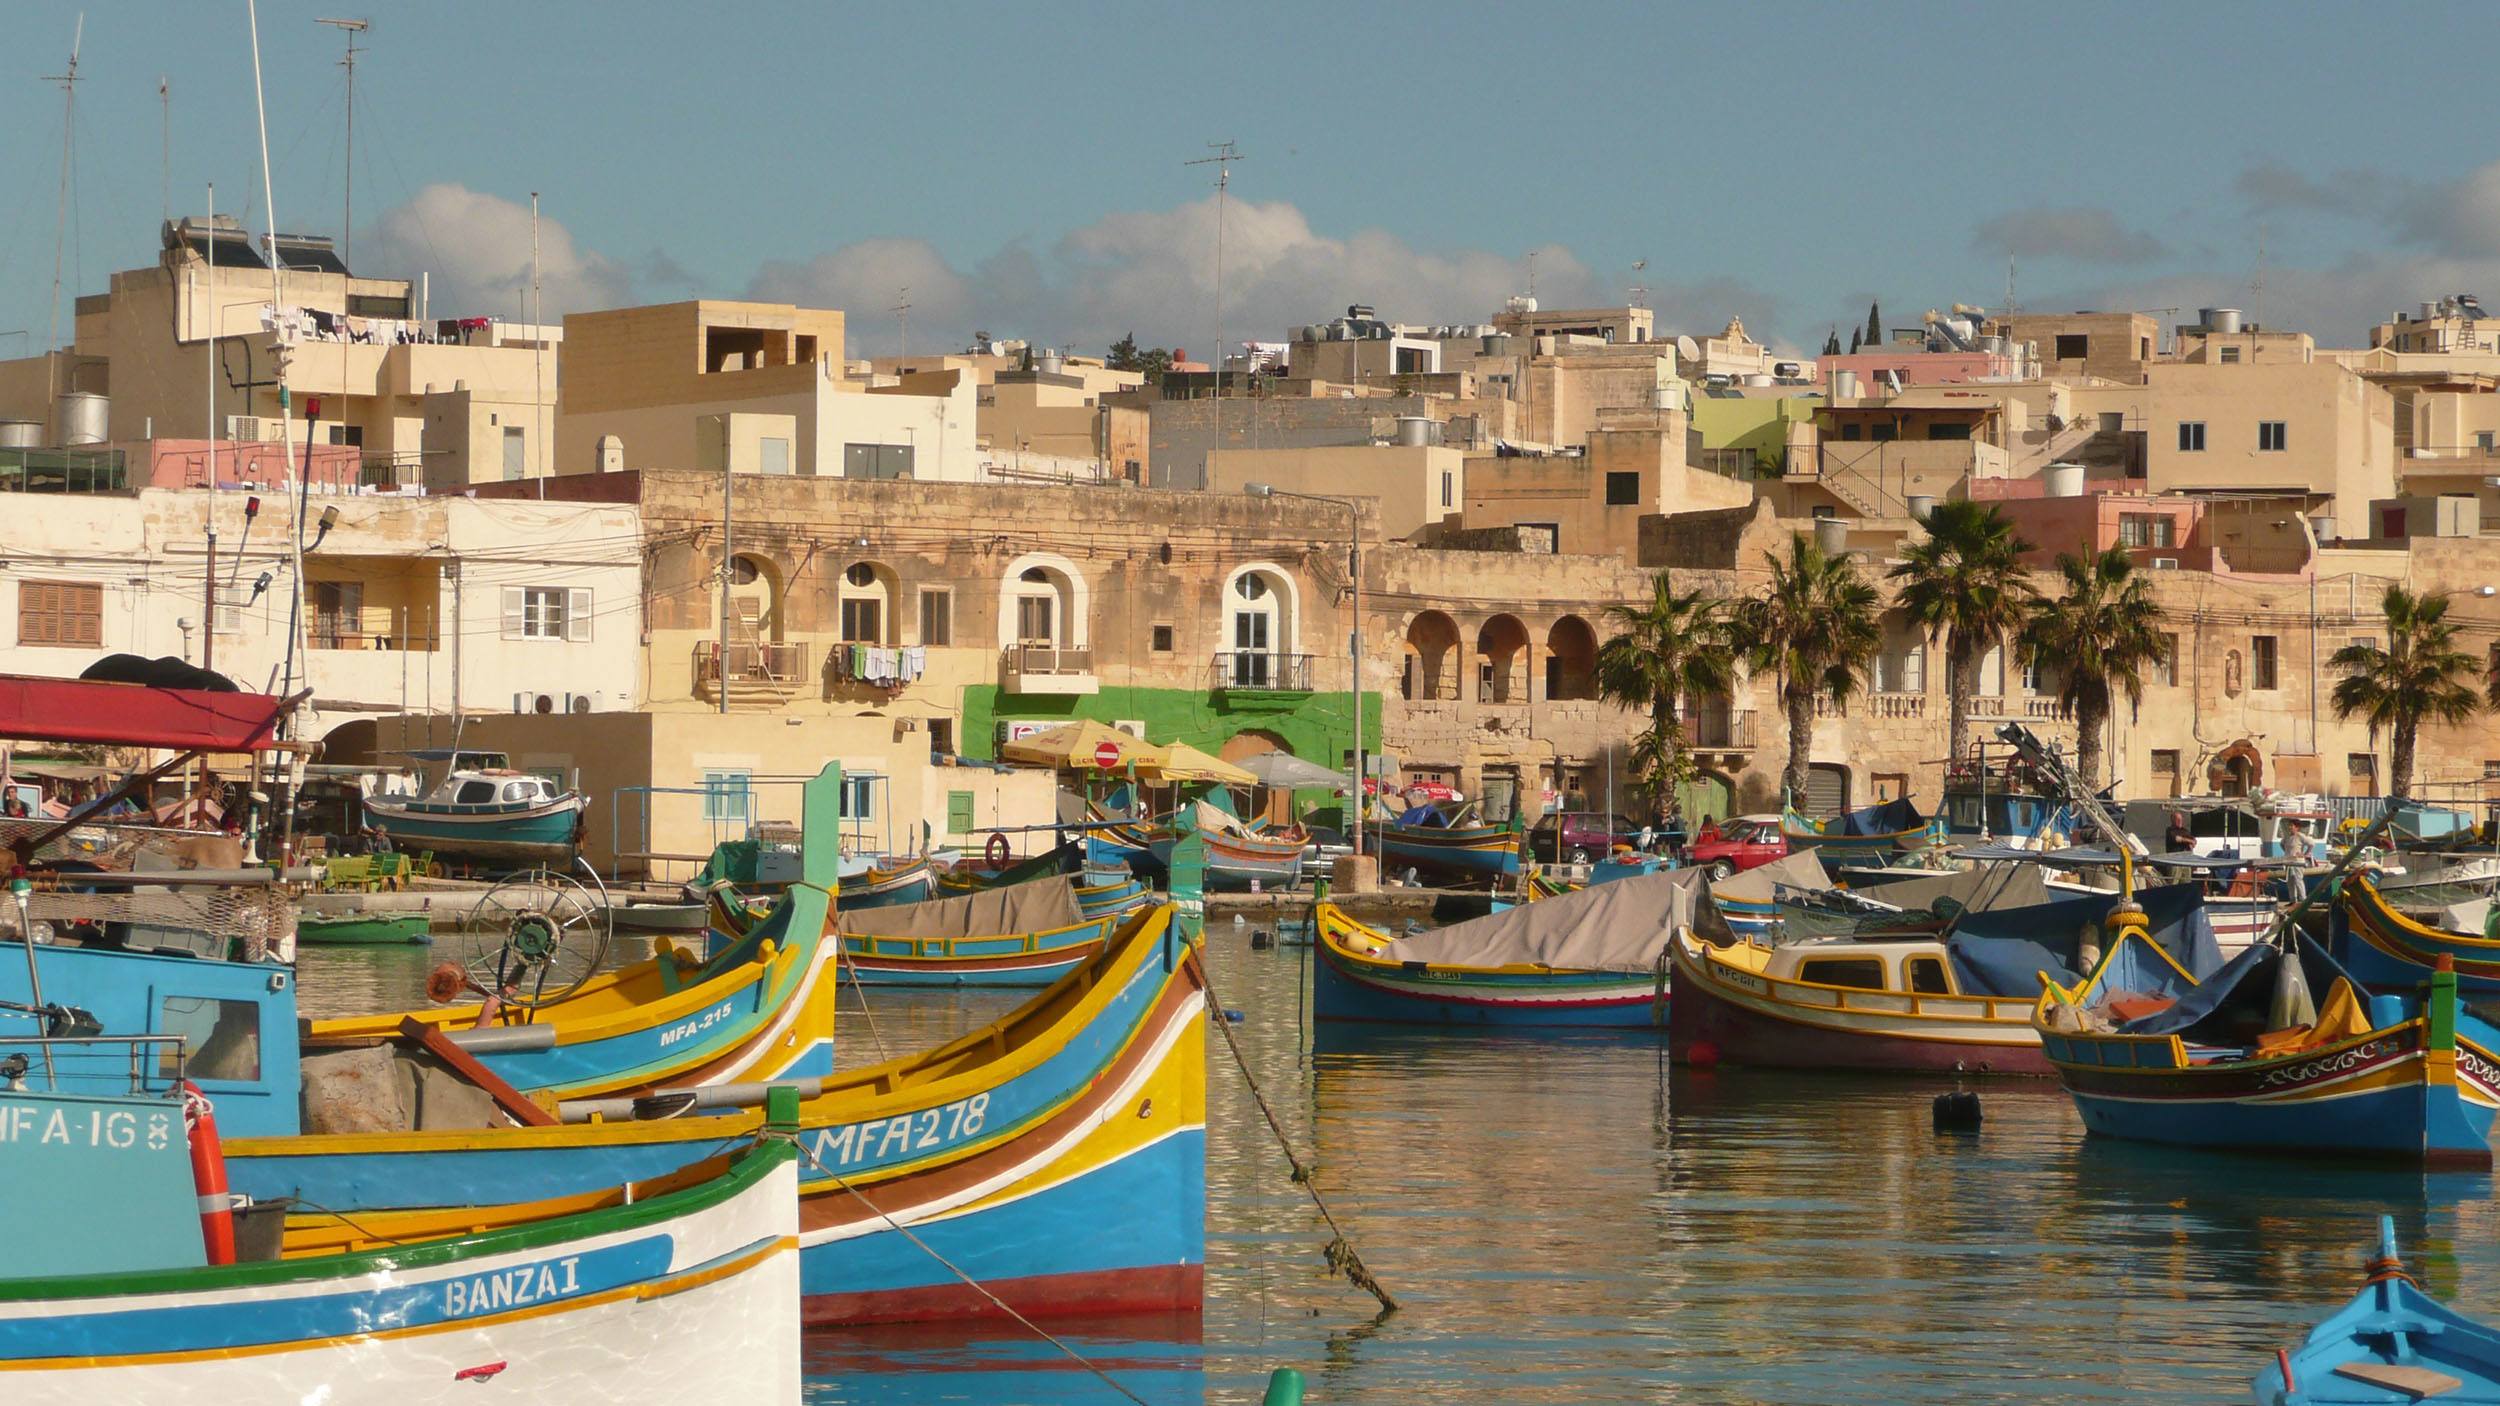 Colourful boats docked in water in Marsaxlokk Malta